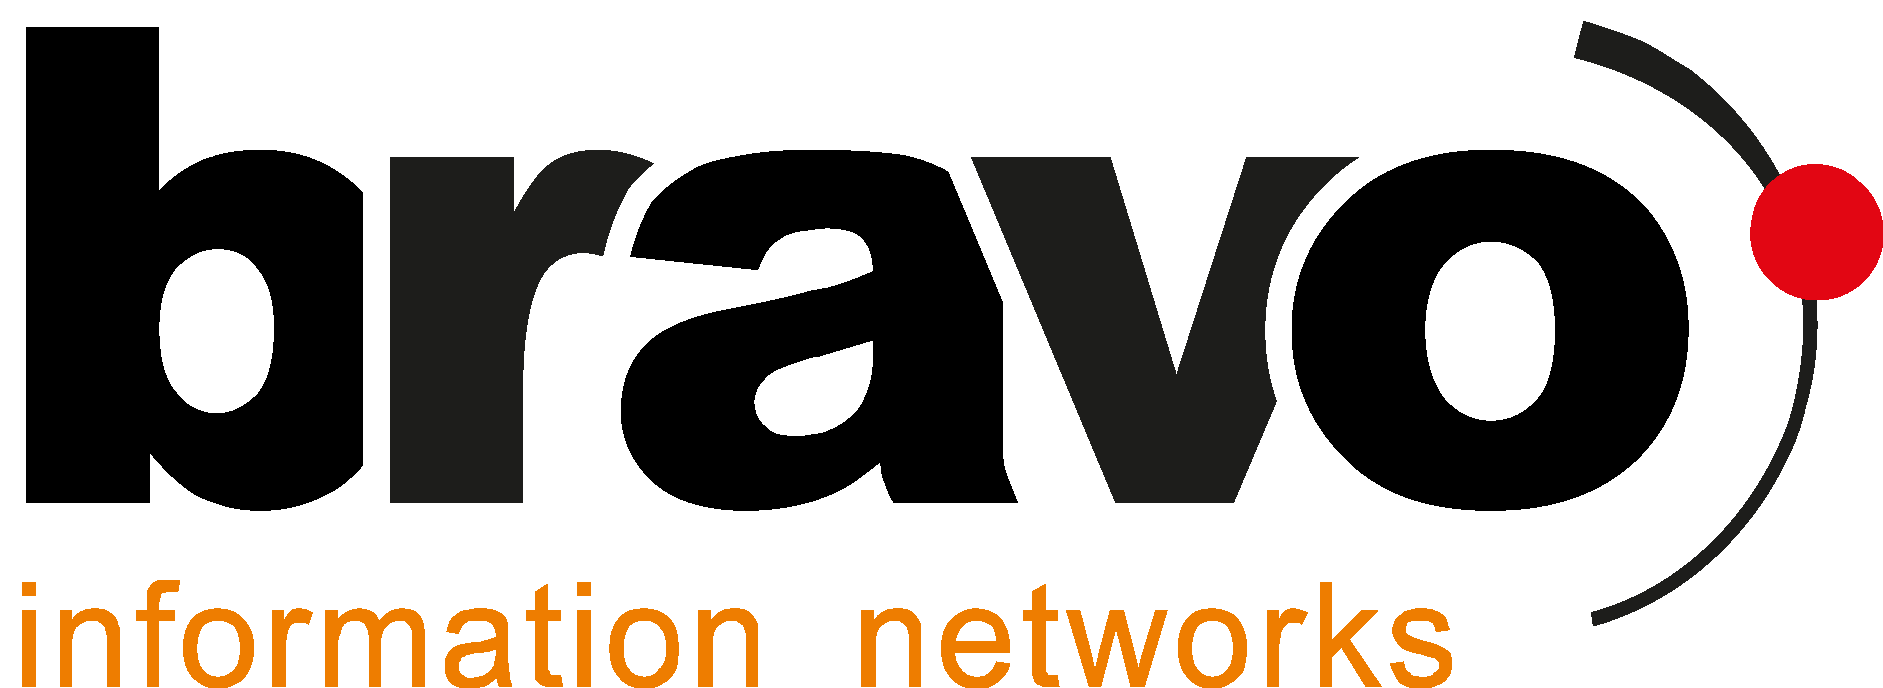 Bravo Information Networks Logo Vector